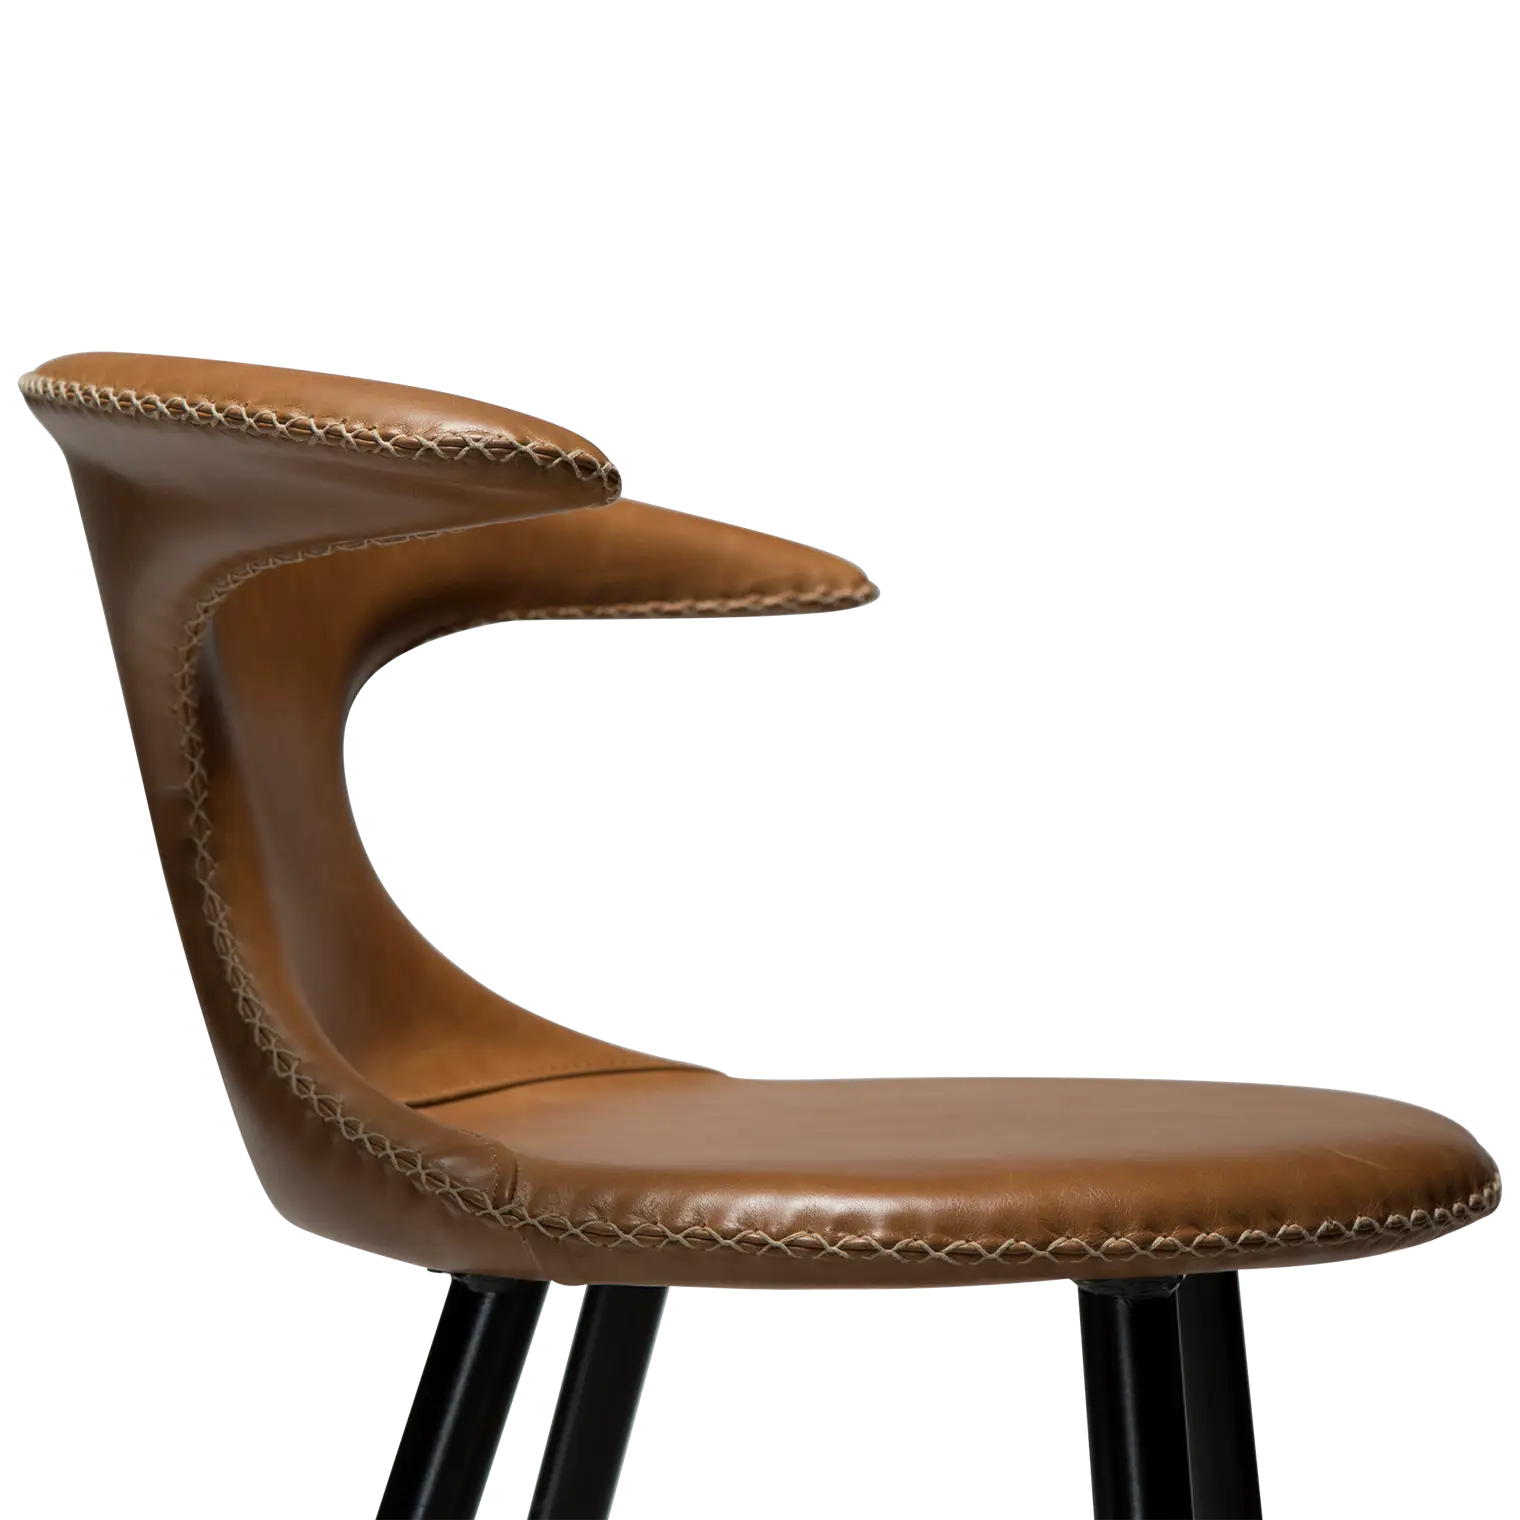 Bar stool FLAIR by Dan Form